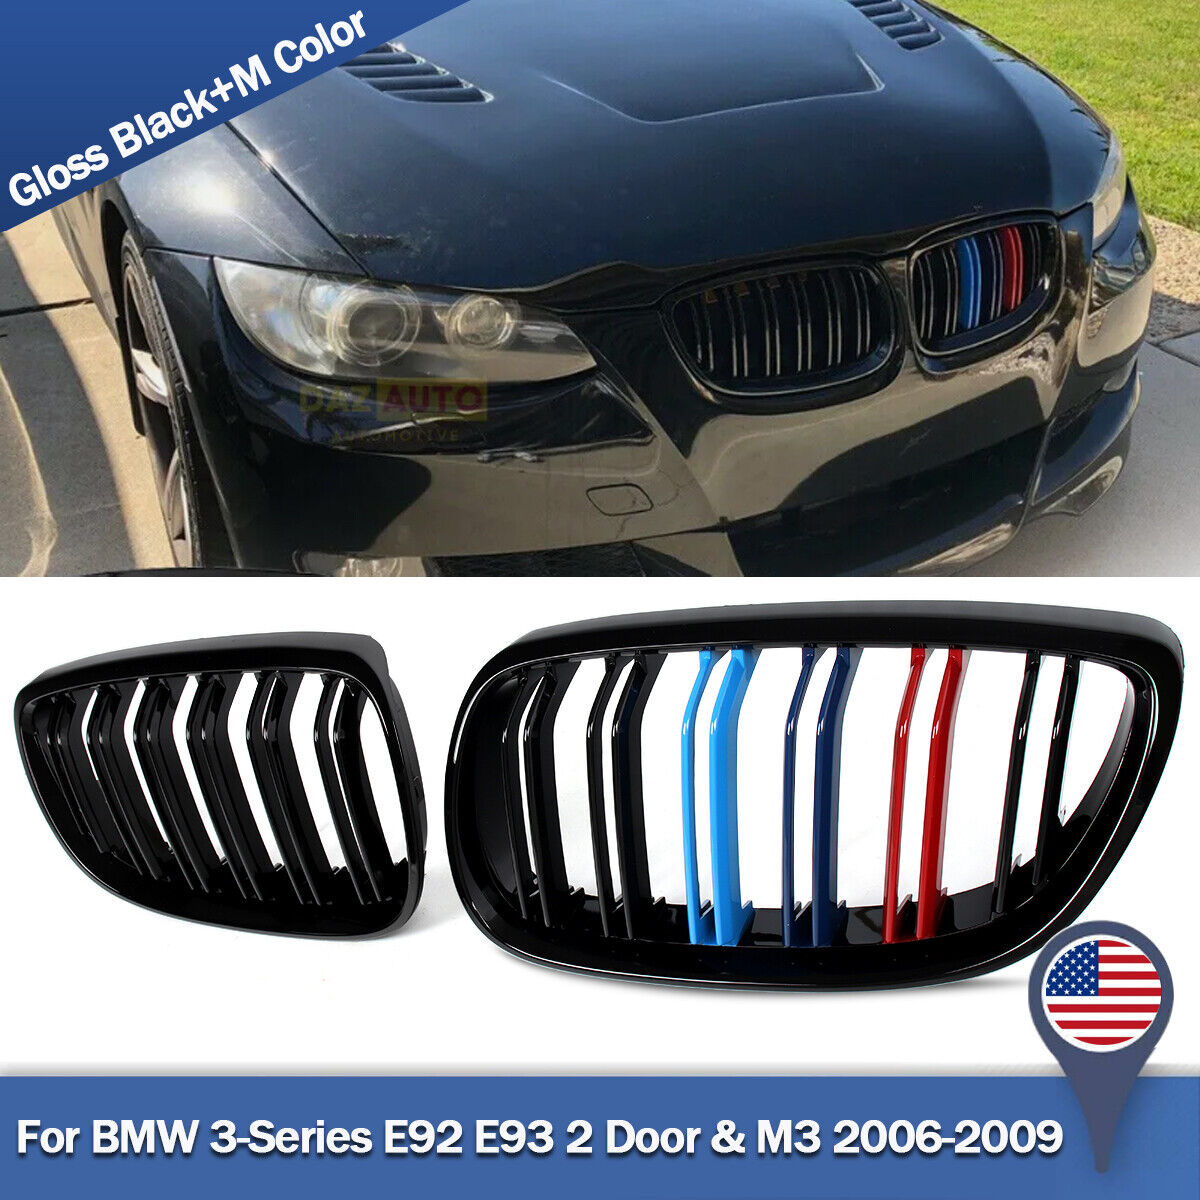 M-Color Gloss Black Front Kidney Grille for BMW 3er E92 E93 M3 2007-2010 Pre-LCI